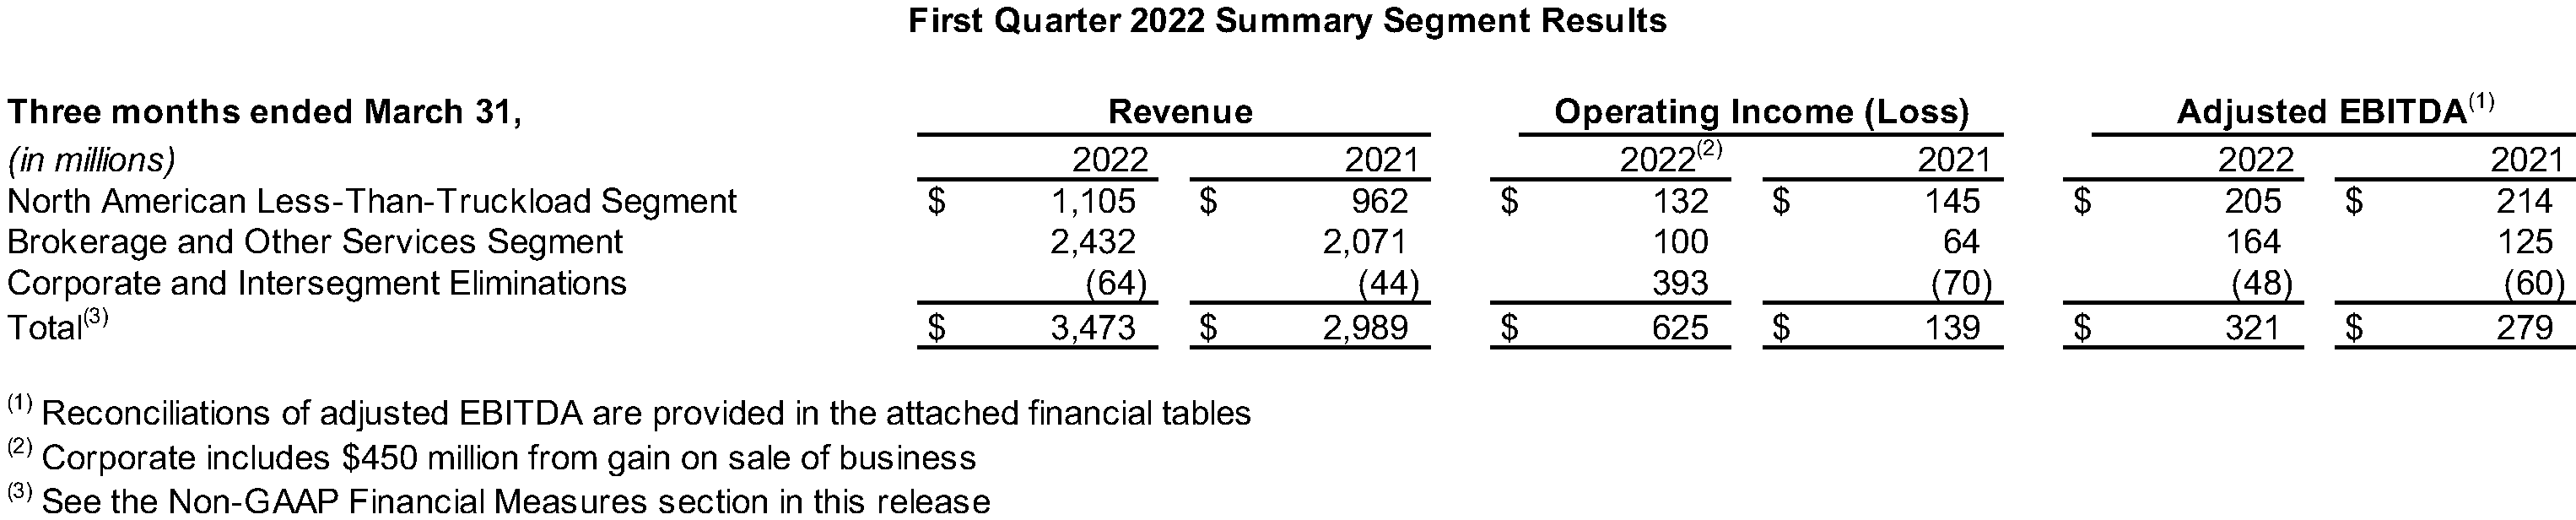 Q1 2022 Summary Segment Results